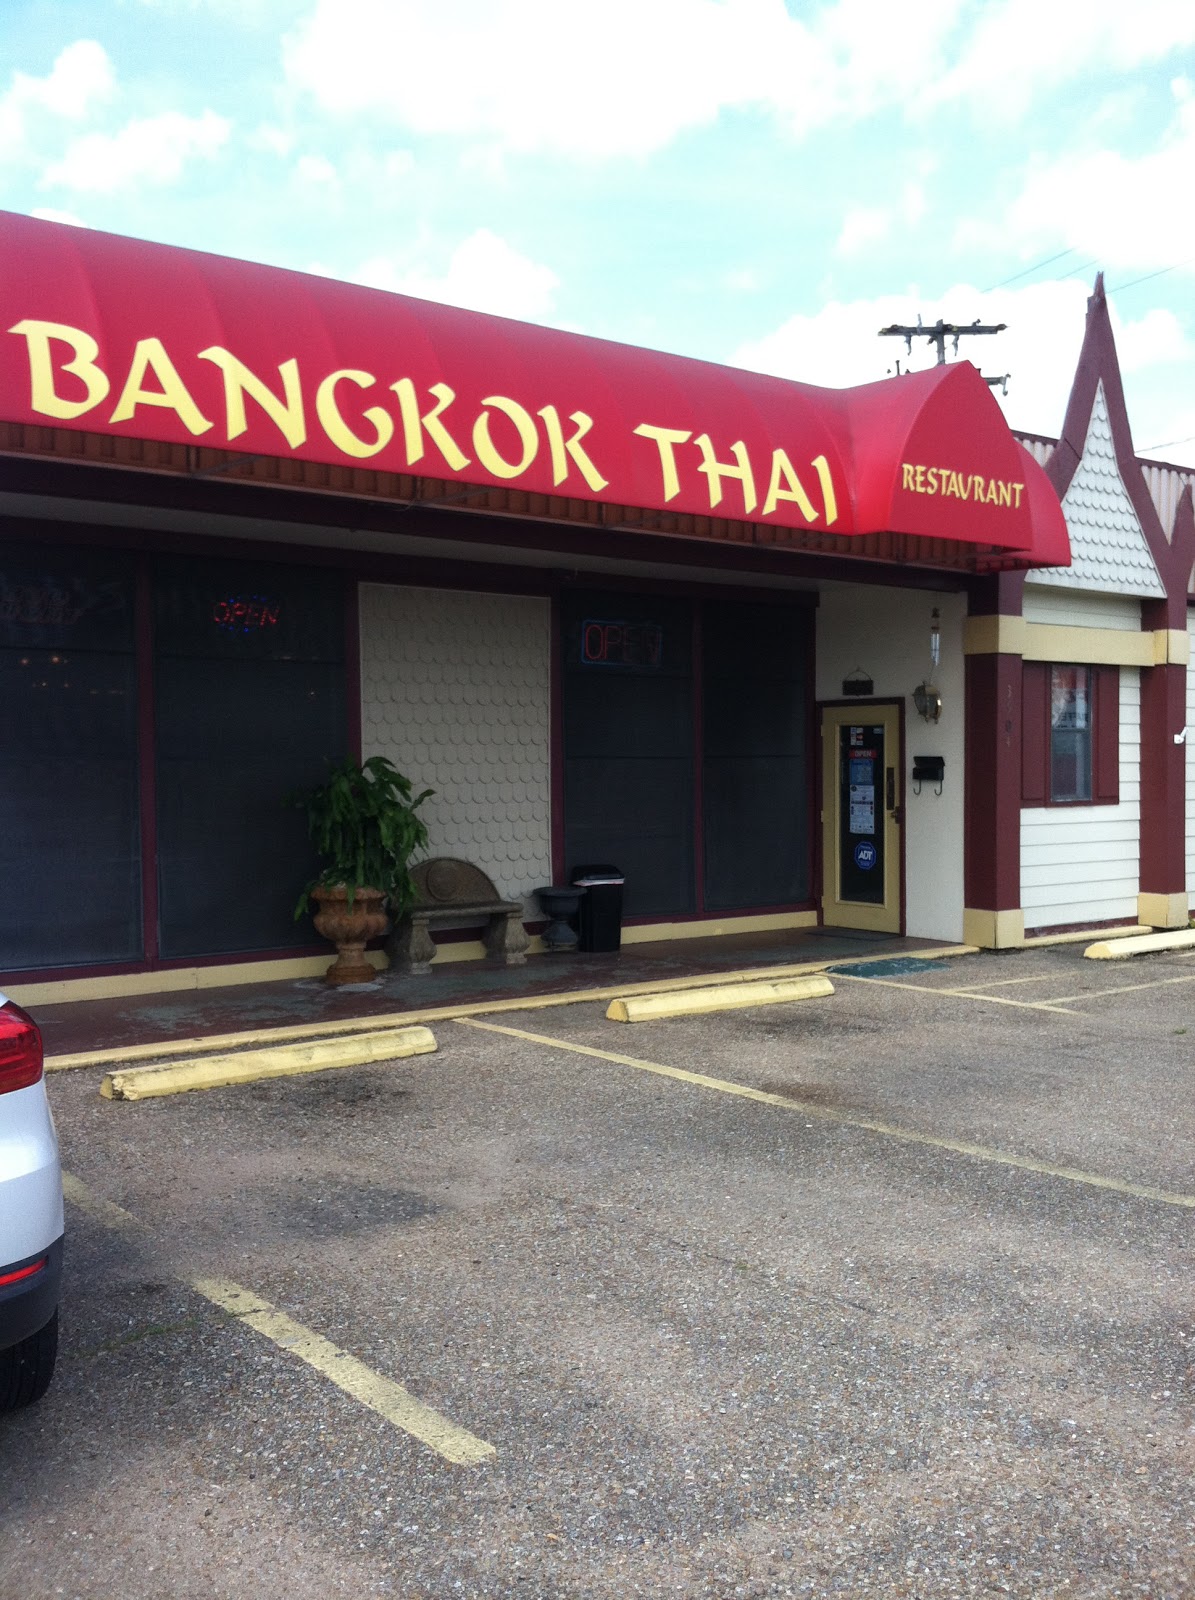 Bangkok Thai -Interesting Place